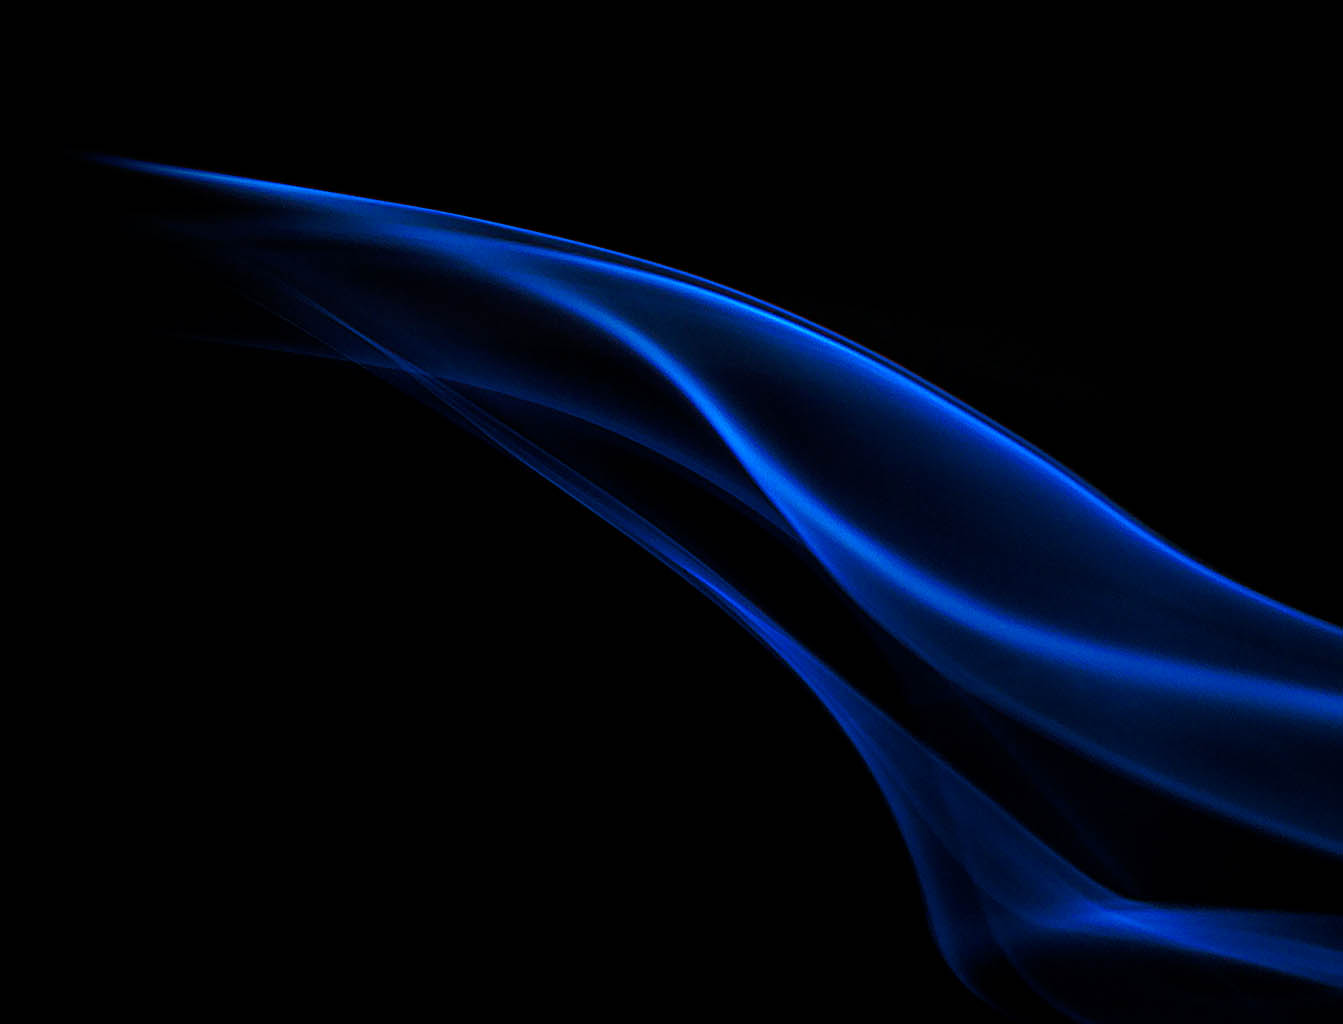 Liquid / Smoke Photography of Blue smoke on black background by Packshot Factory